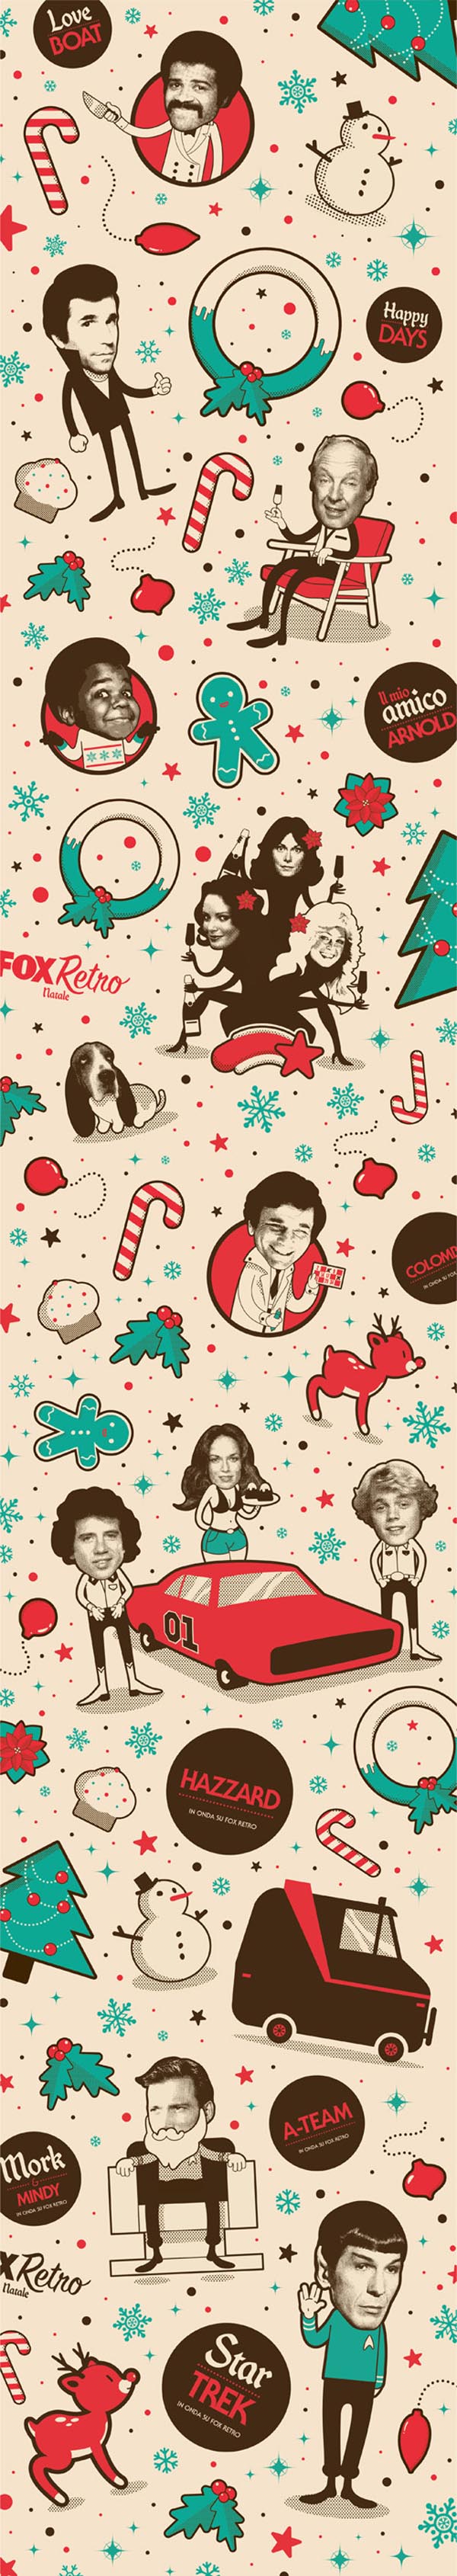 Christmas promo for Fox Retro from 2012